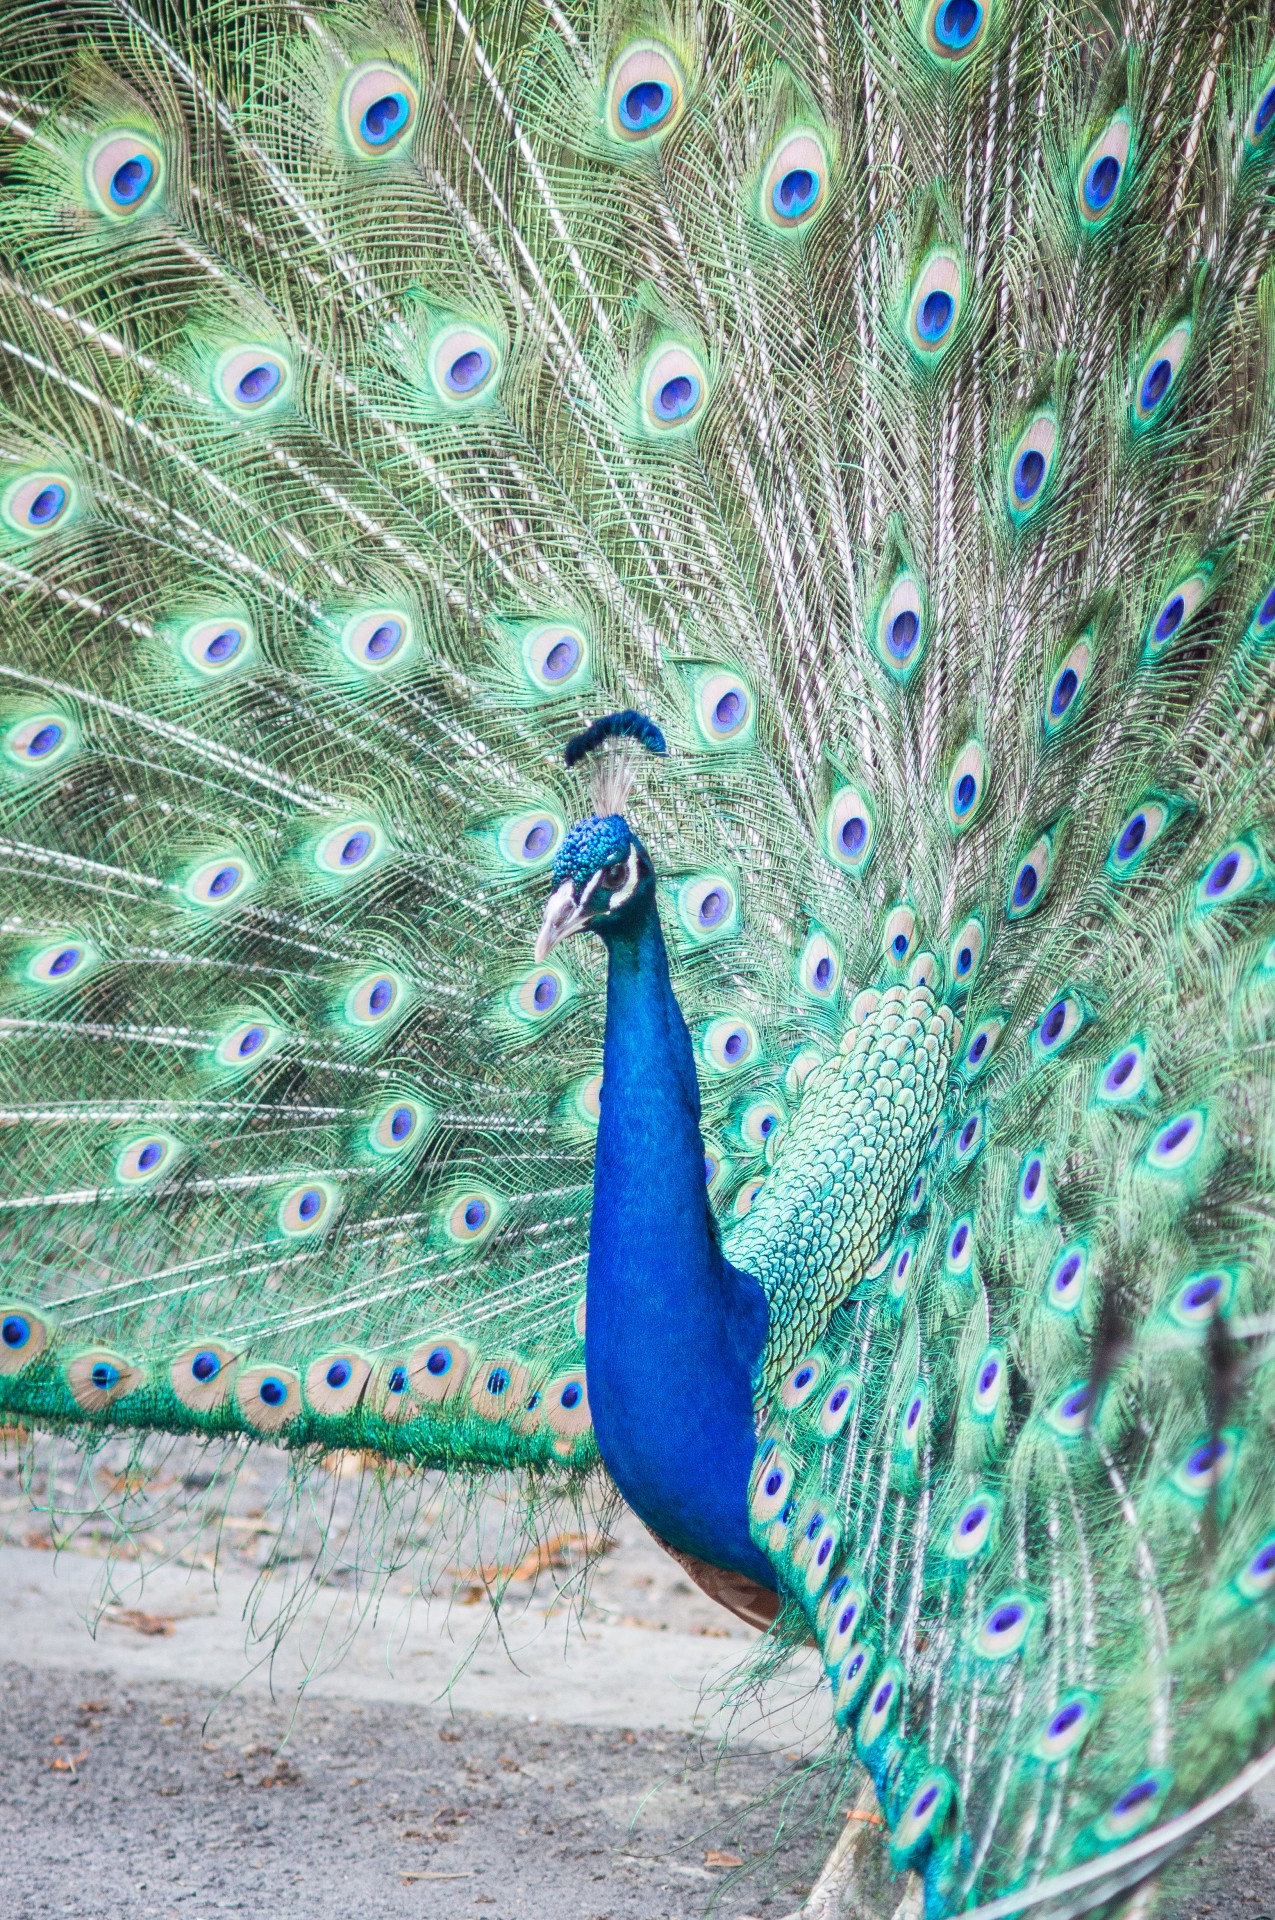 Profile Of A Peacock